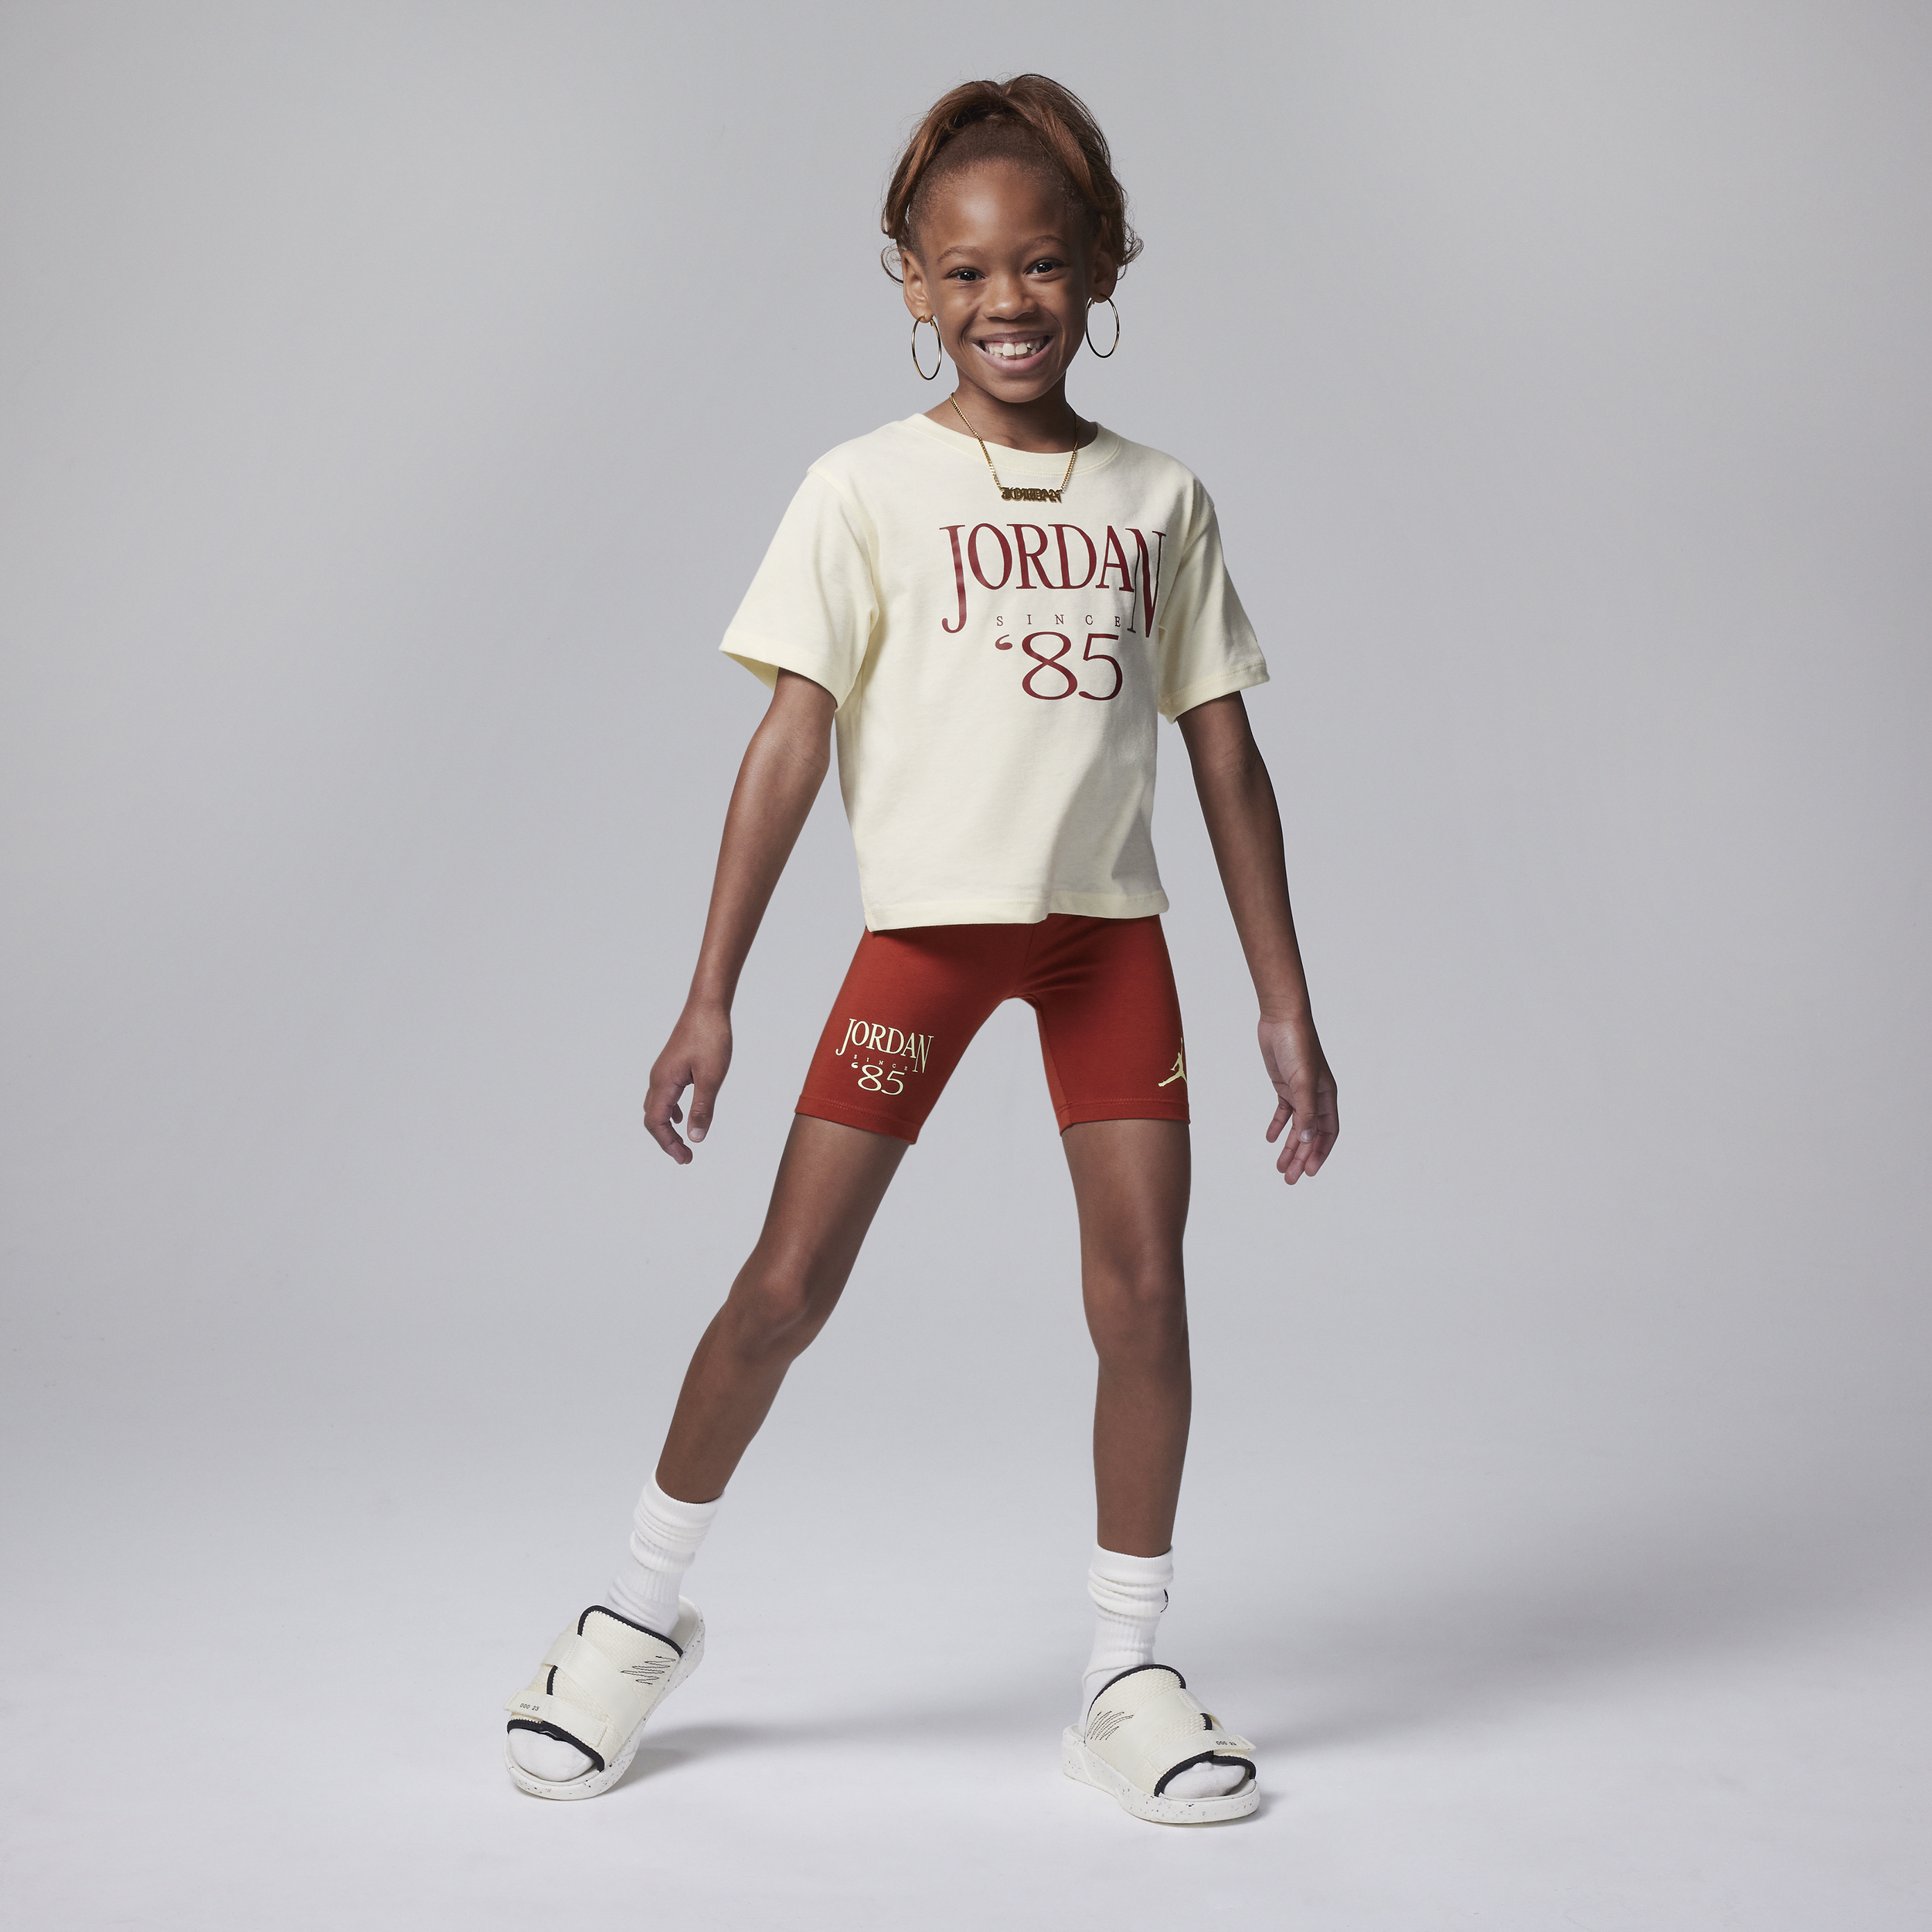 Jordan Brooklyn Mini Me Conjunto de mallas de ciclismo - Niño/a pequeño/a - Rojo